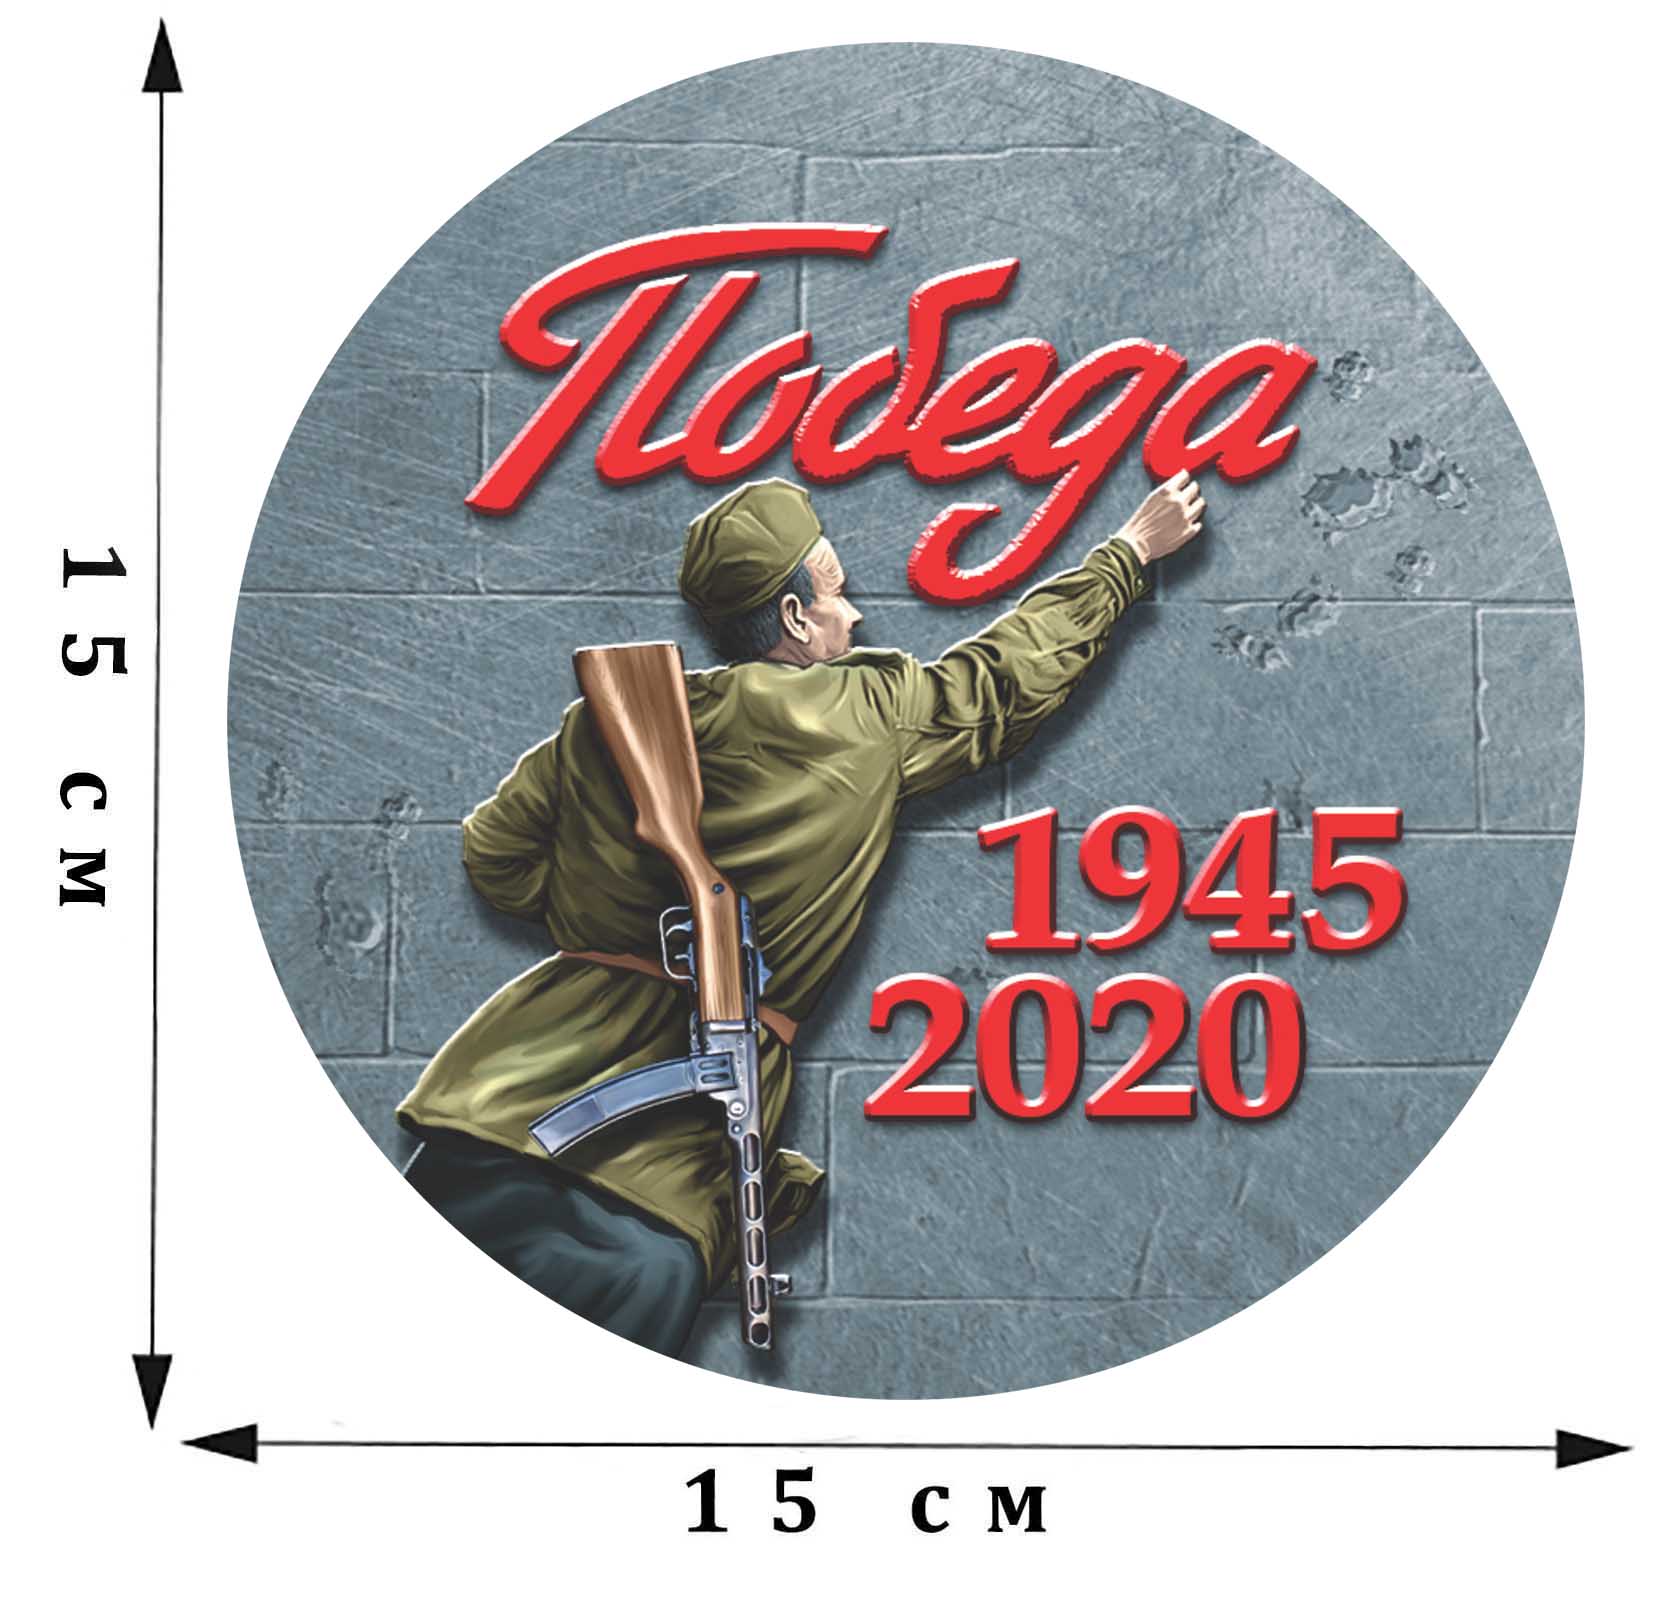 Наклейка на 9 мая «Победа! 1945-2020» размером 15 х 15 см